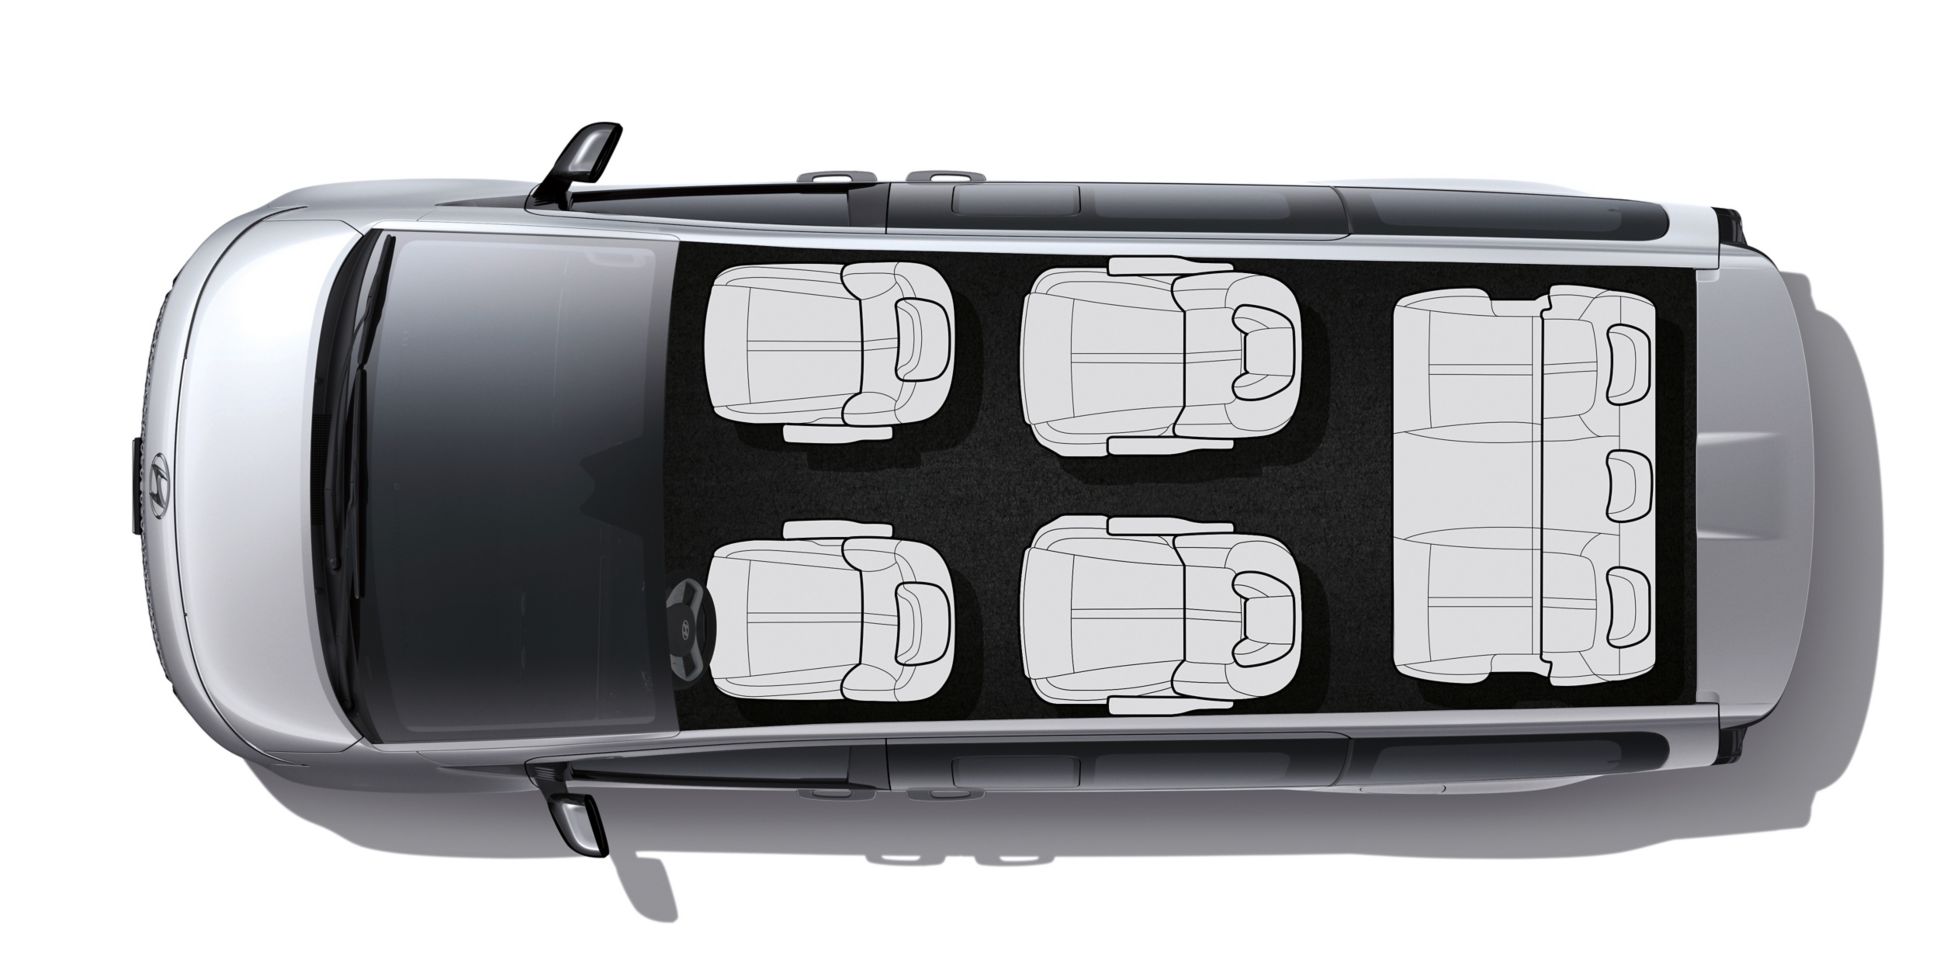 Topview of the Hyundai Staria 7 seats